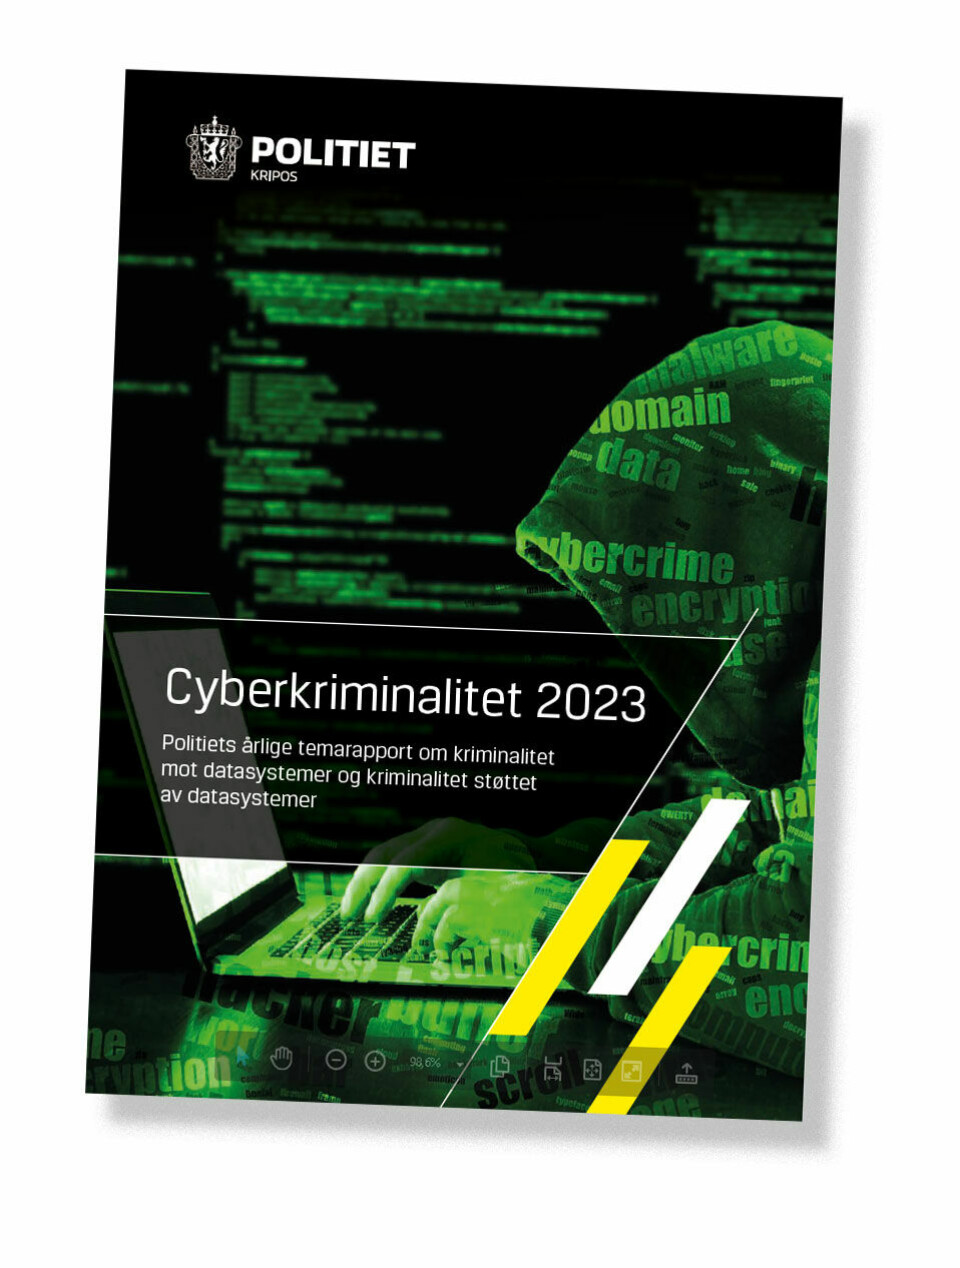 NC3s rapport om cyberkriminalitet.